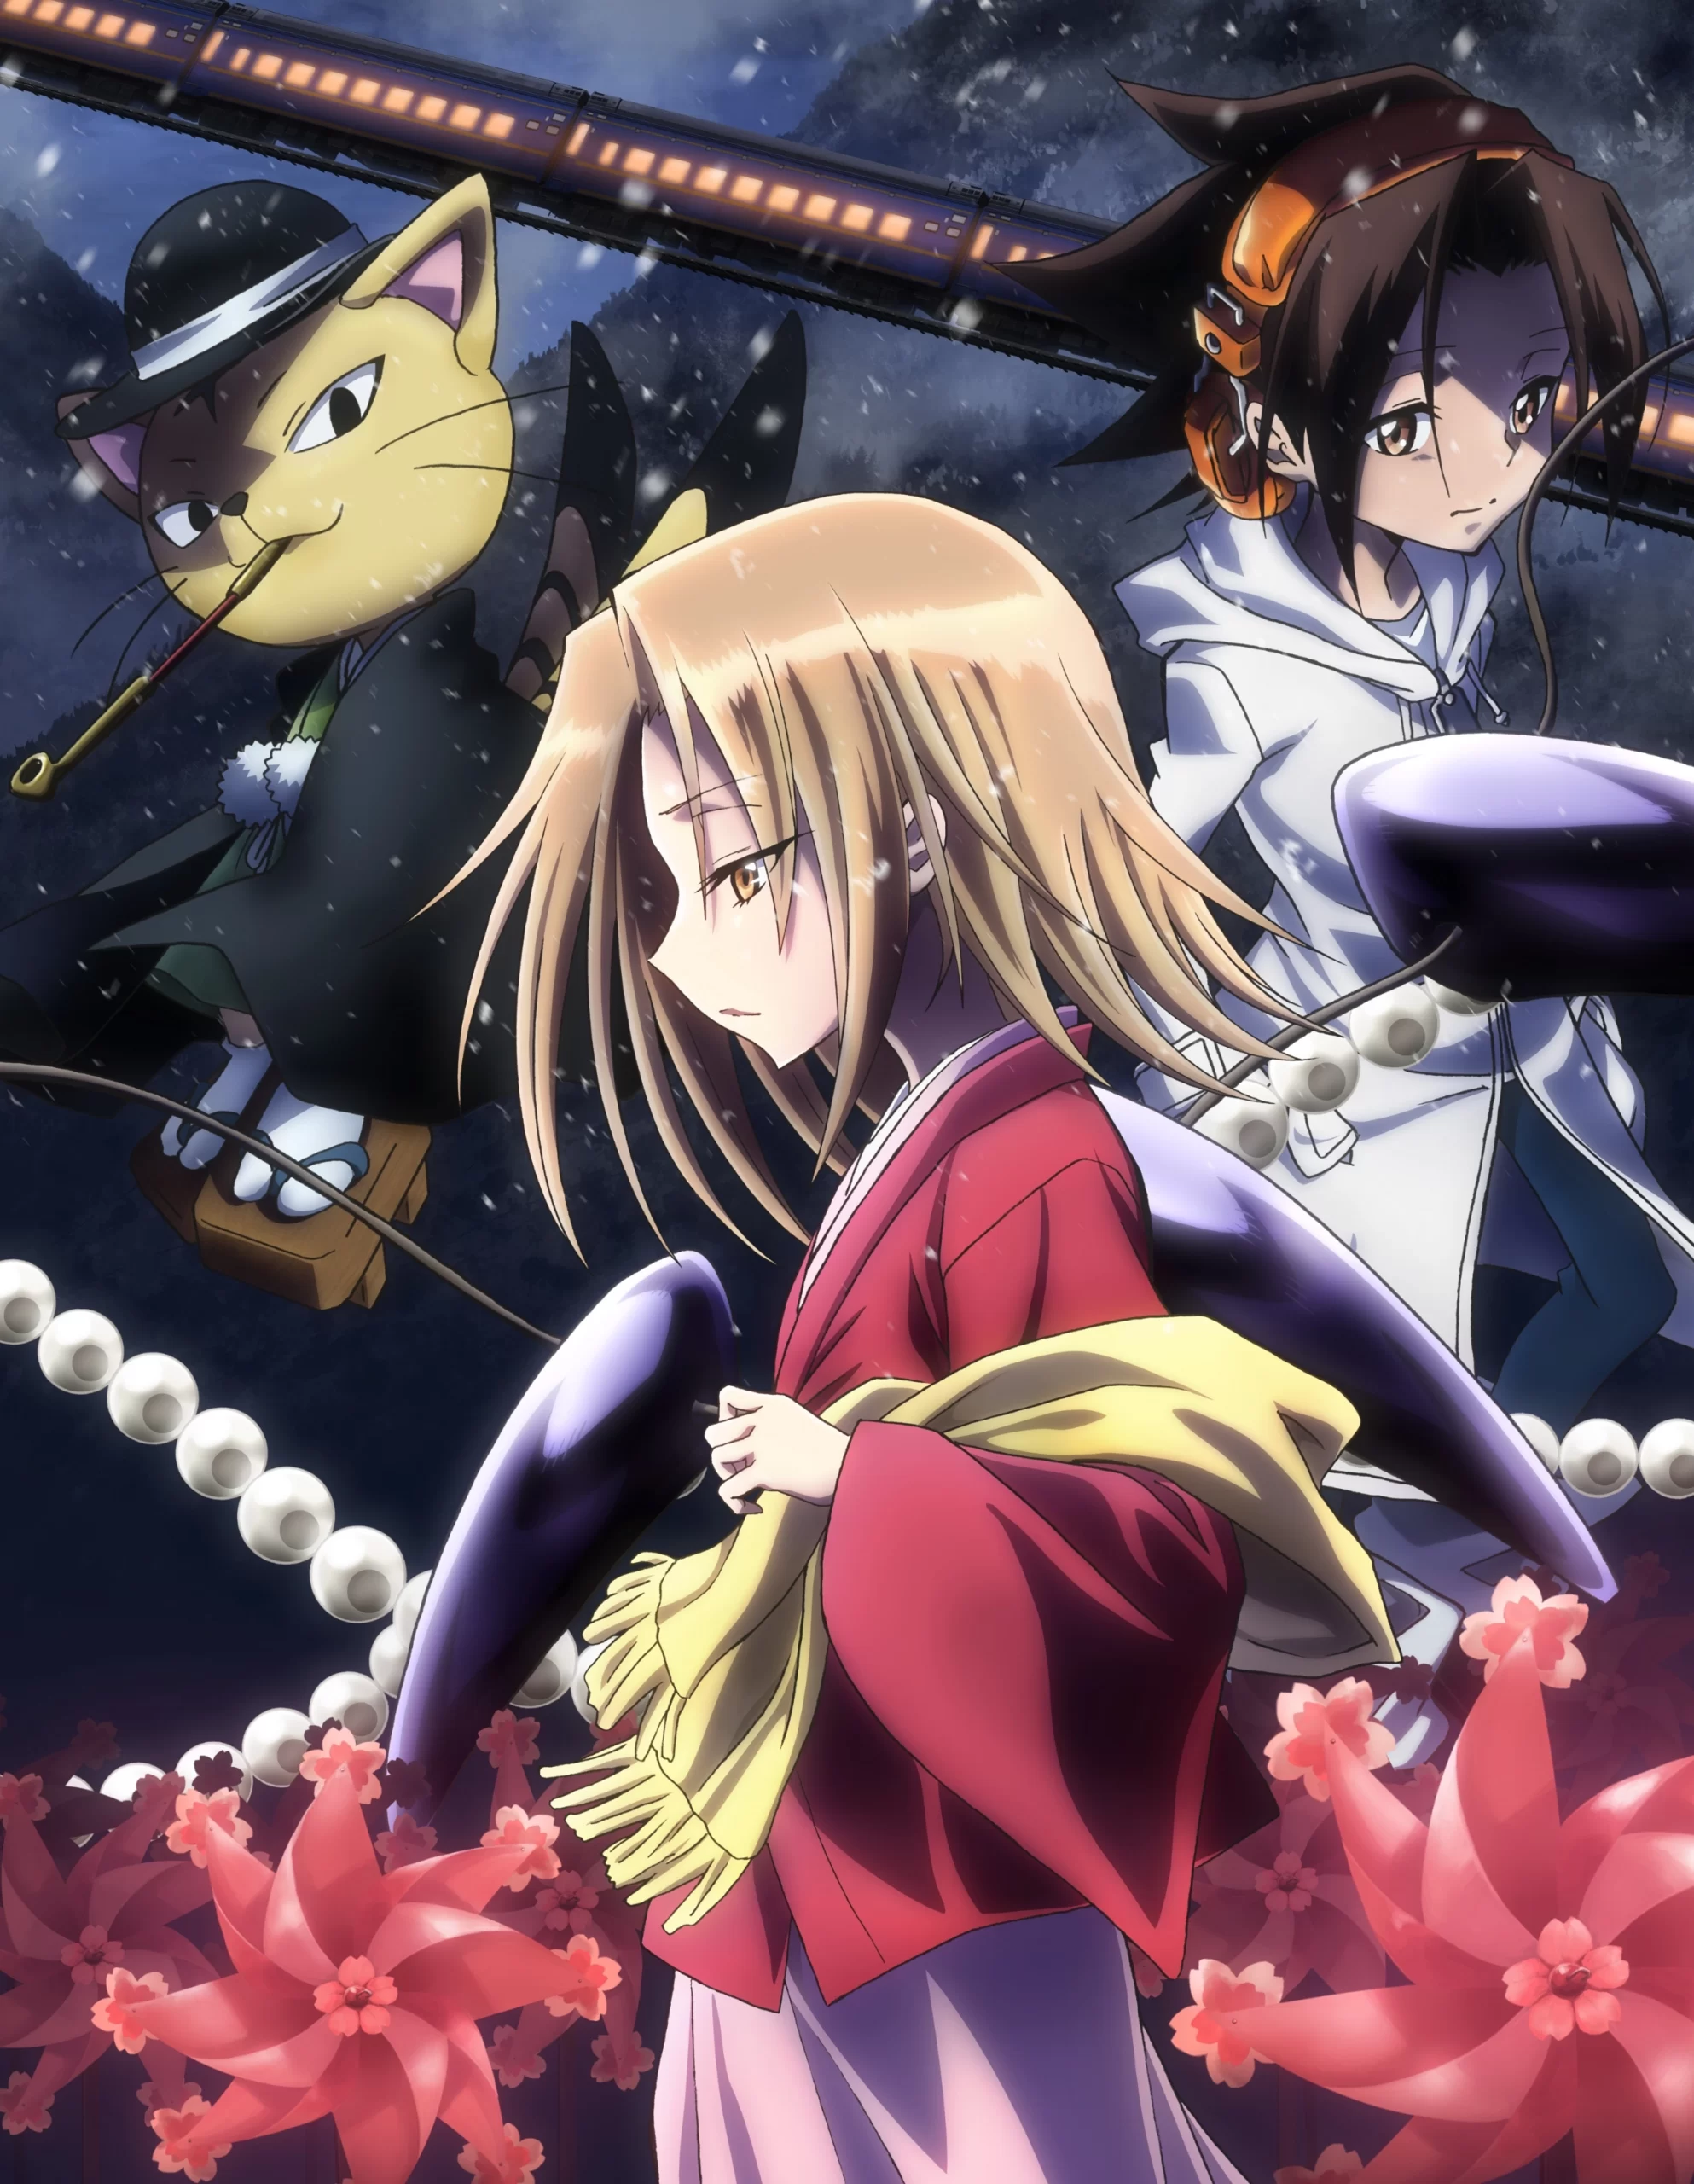 New Shaman King Anime Gets Sequel - News - Anime News Network